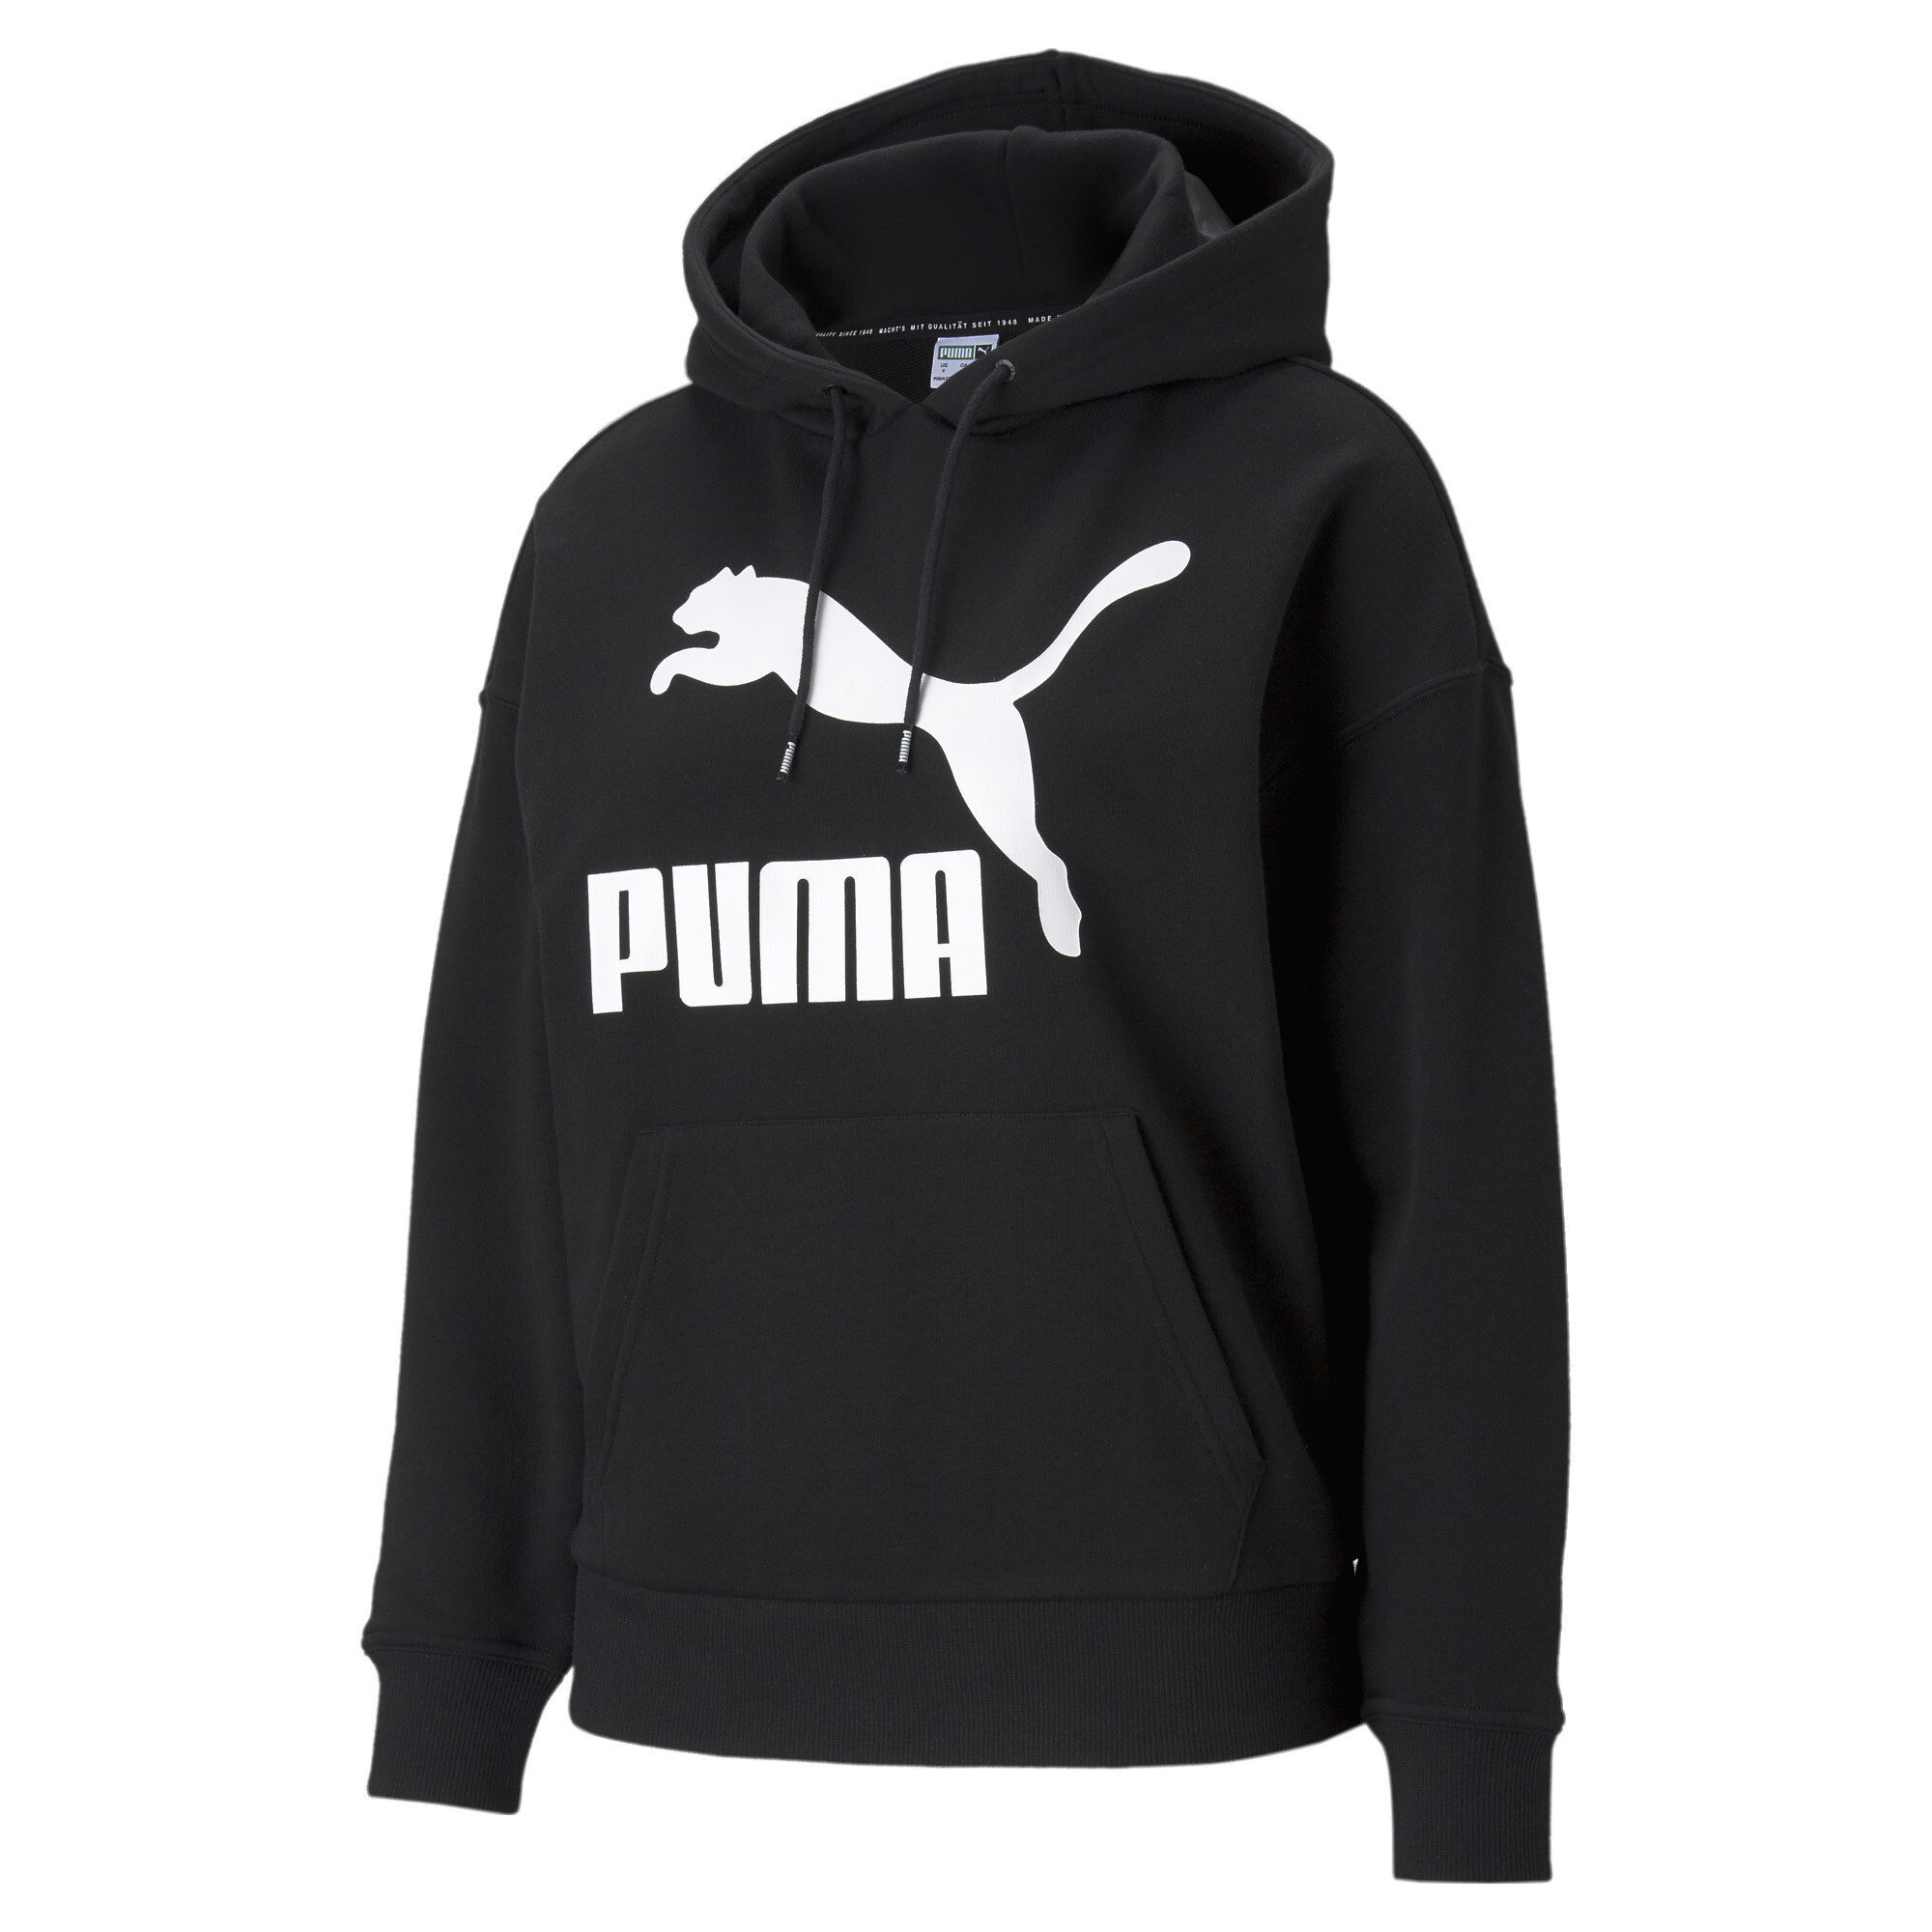 Women's Puma Classics Logo's Hoodie, Black, Size M, Clothing